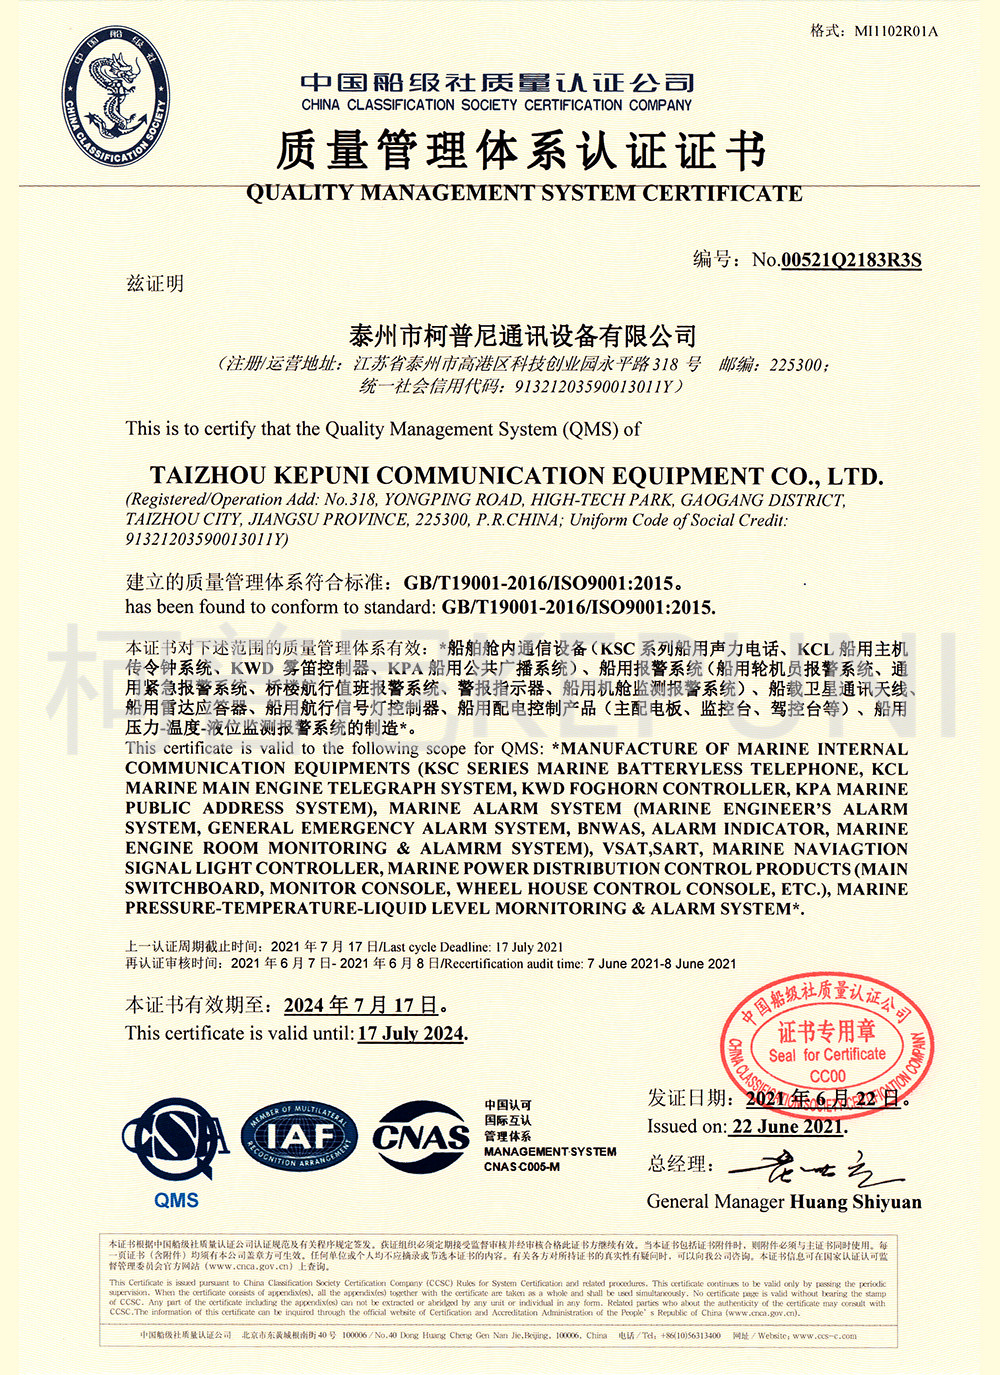 CCS system certificate